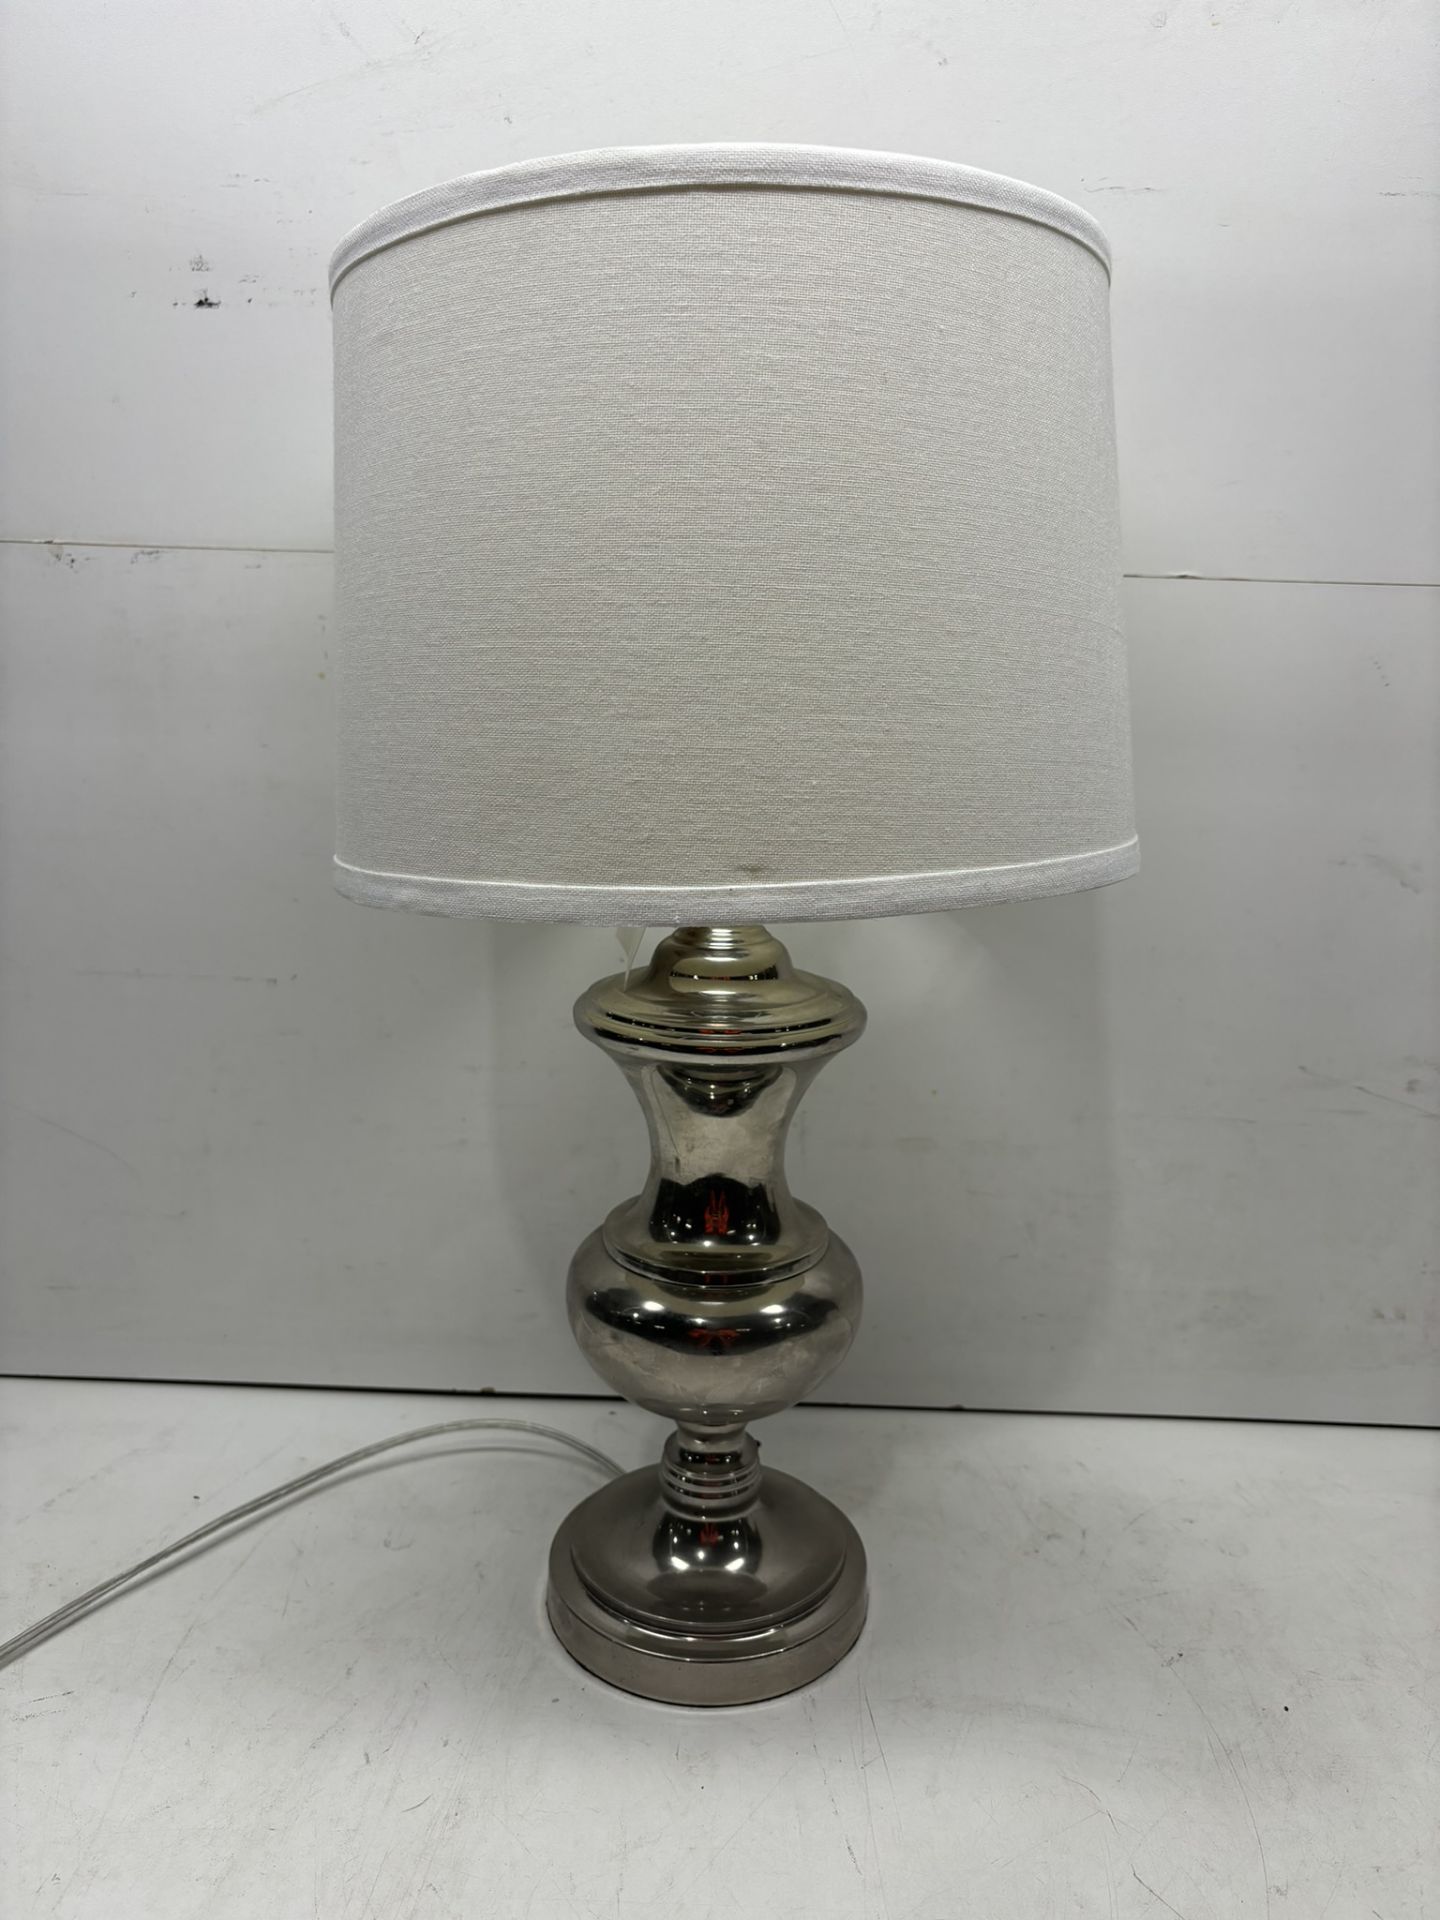 Ex-Display Silver Metal Table Lamp